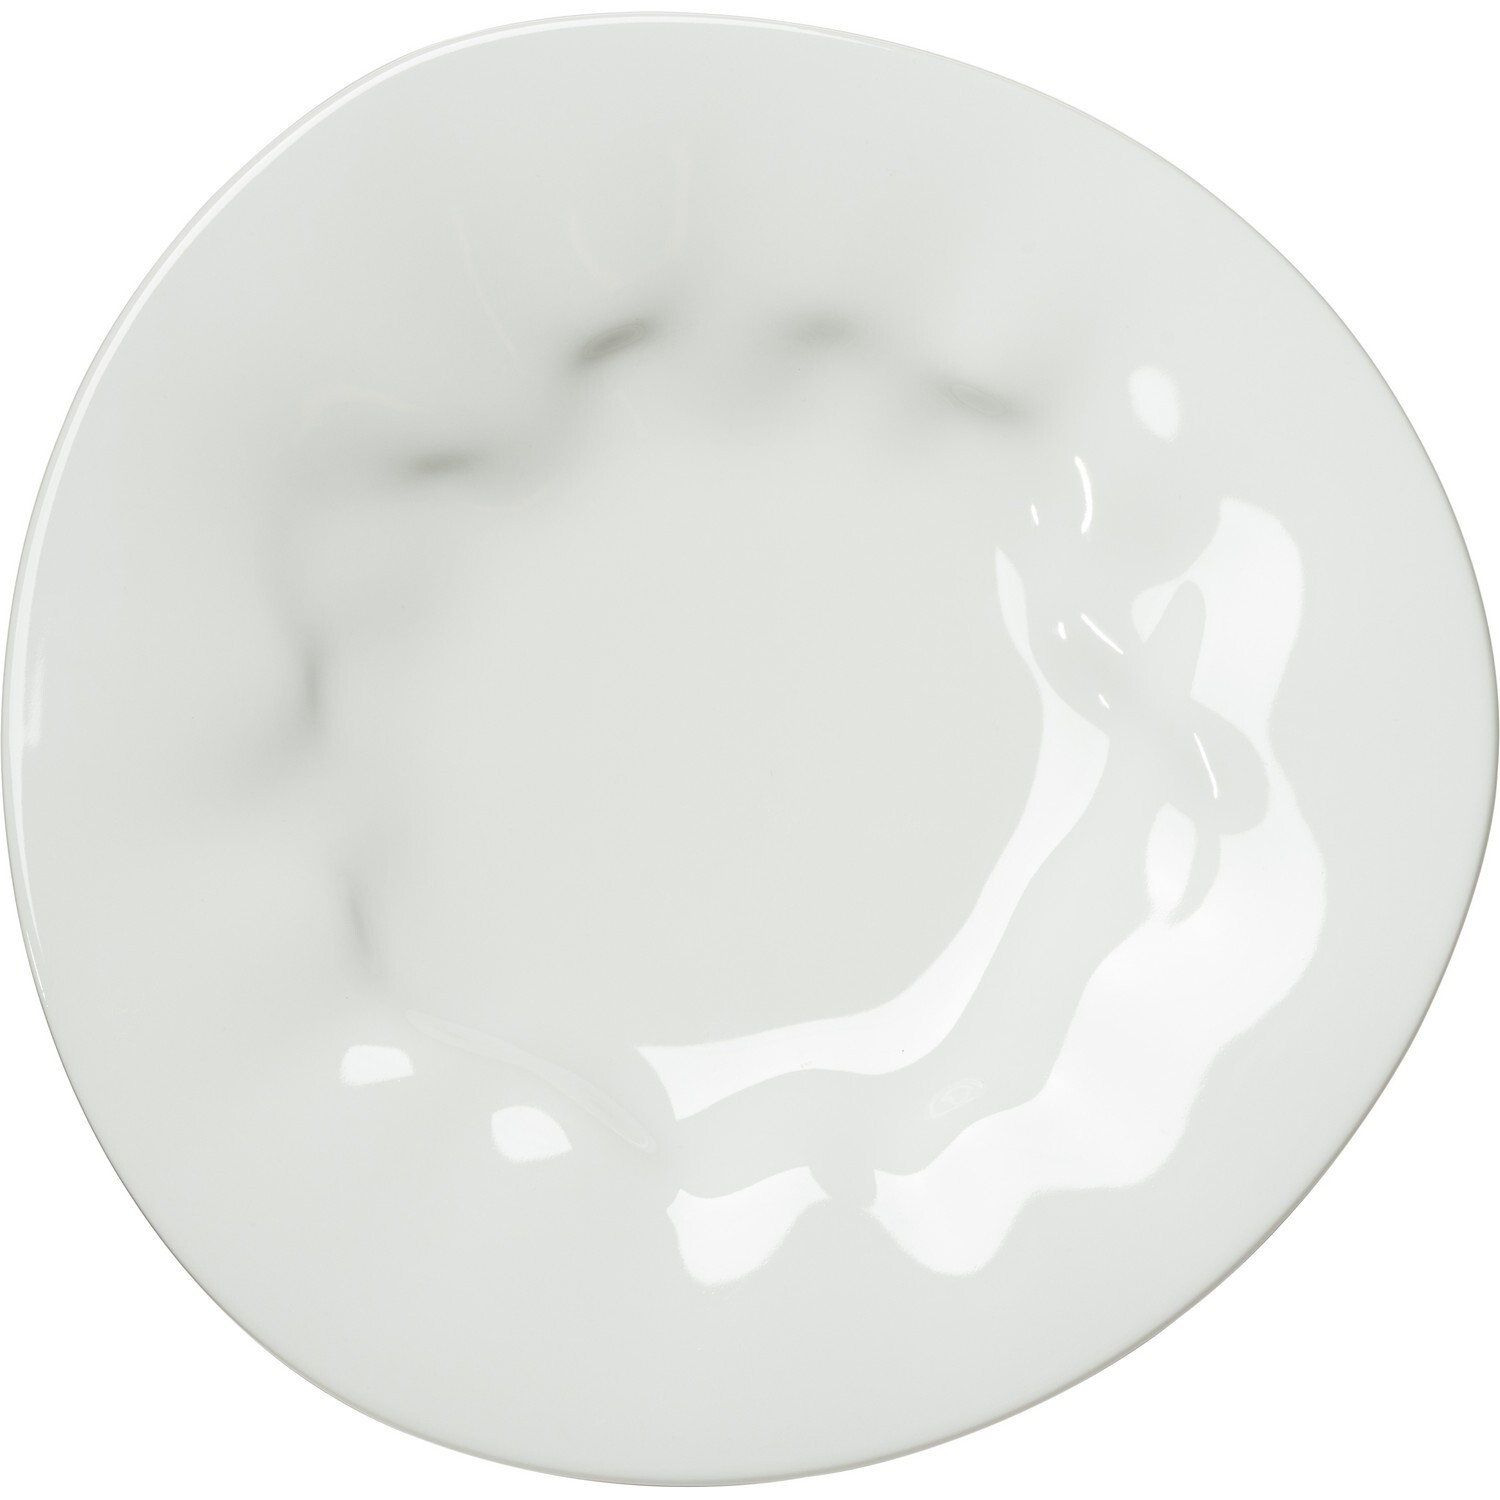 Тарелка Lilien Austria Фламенко 250х250мм, фарфор, белый